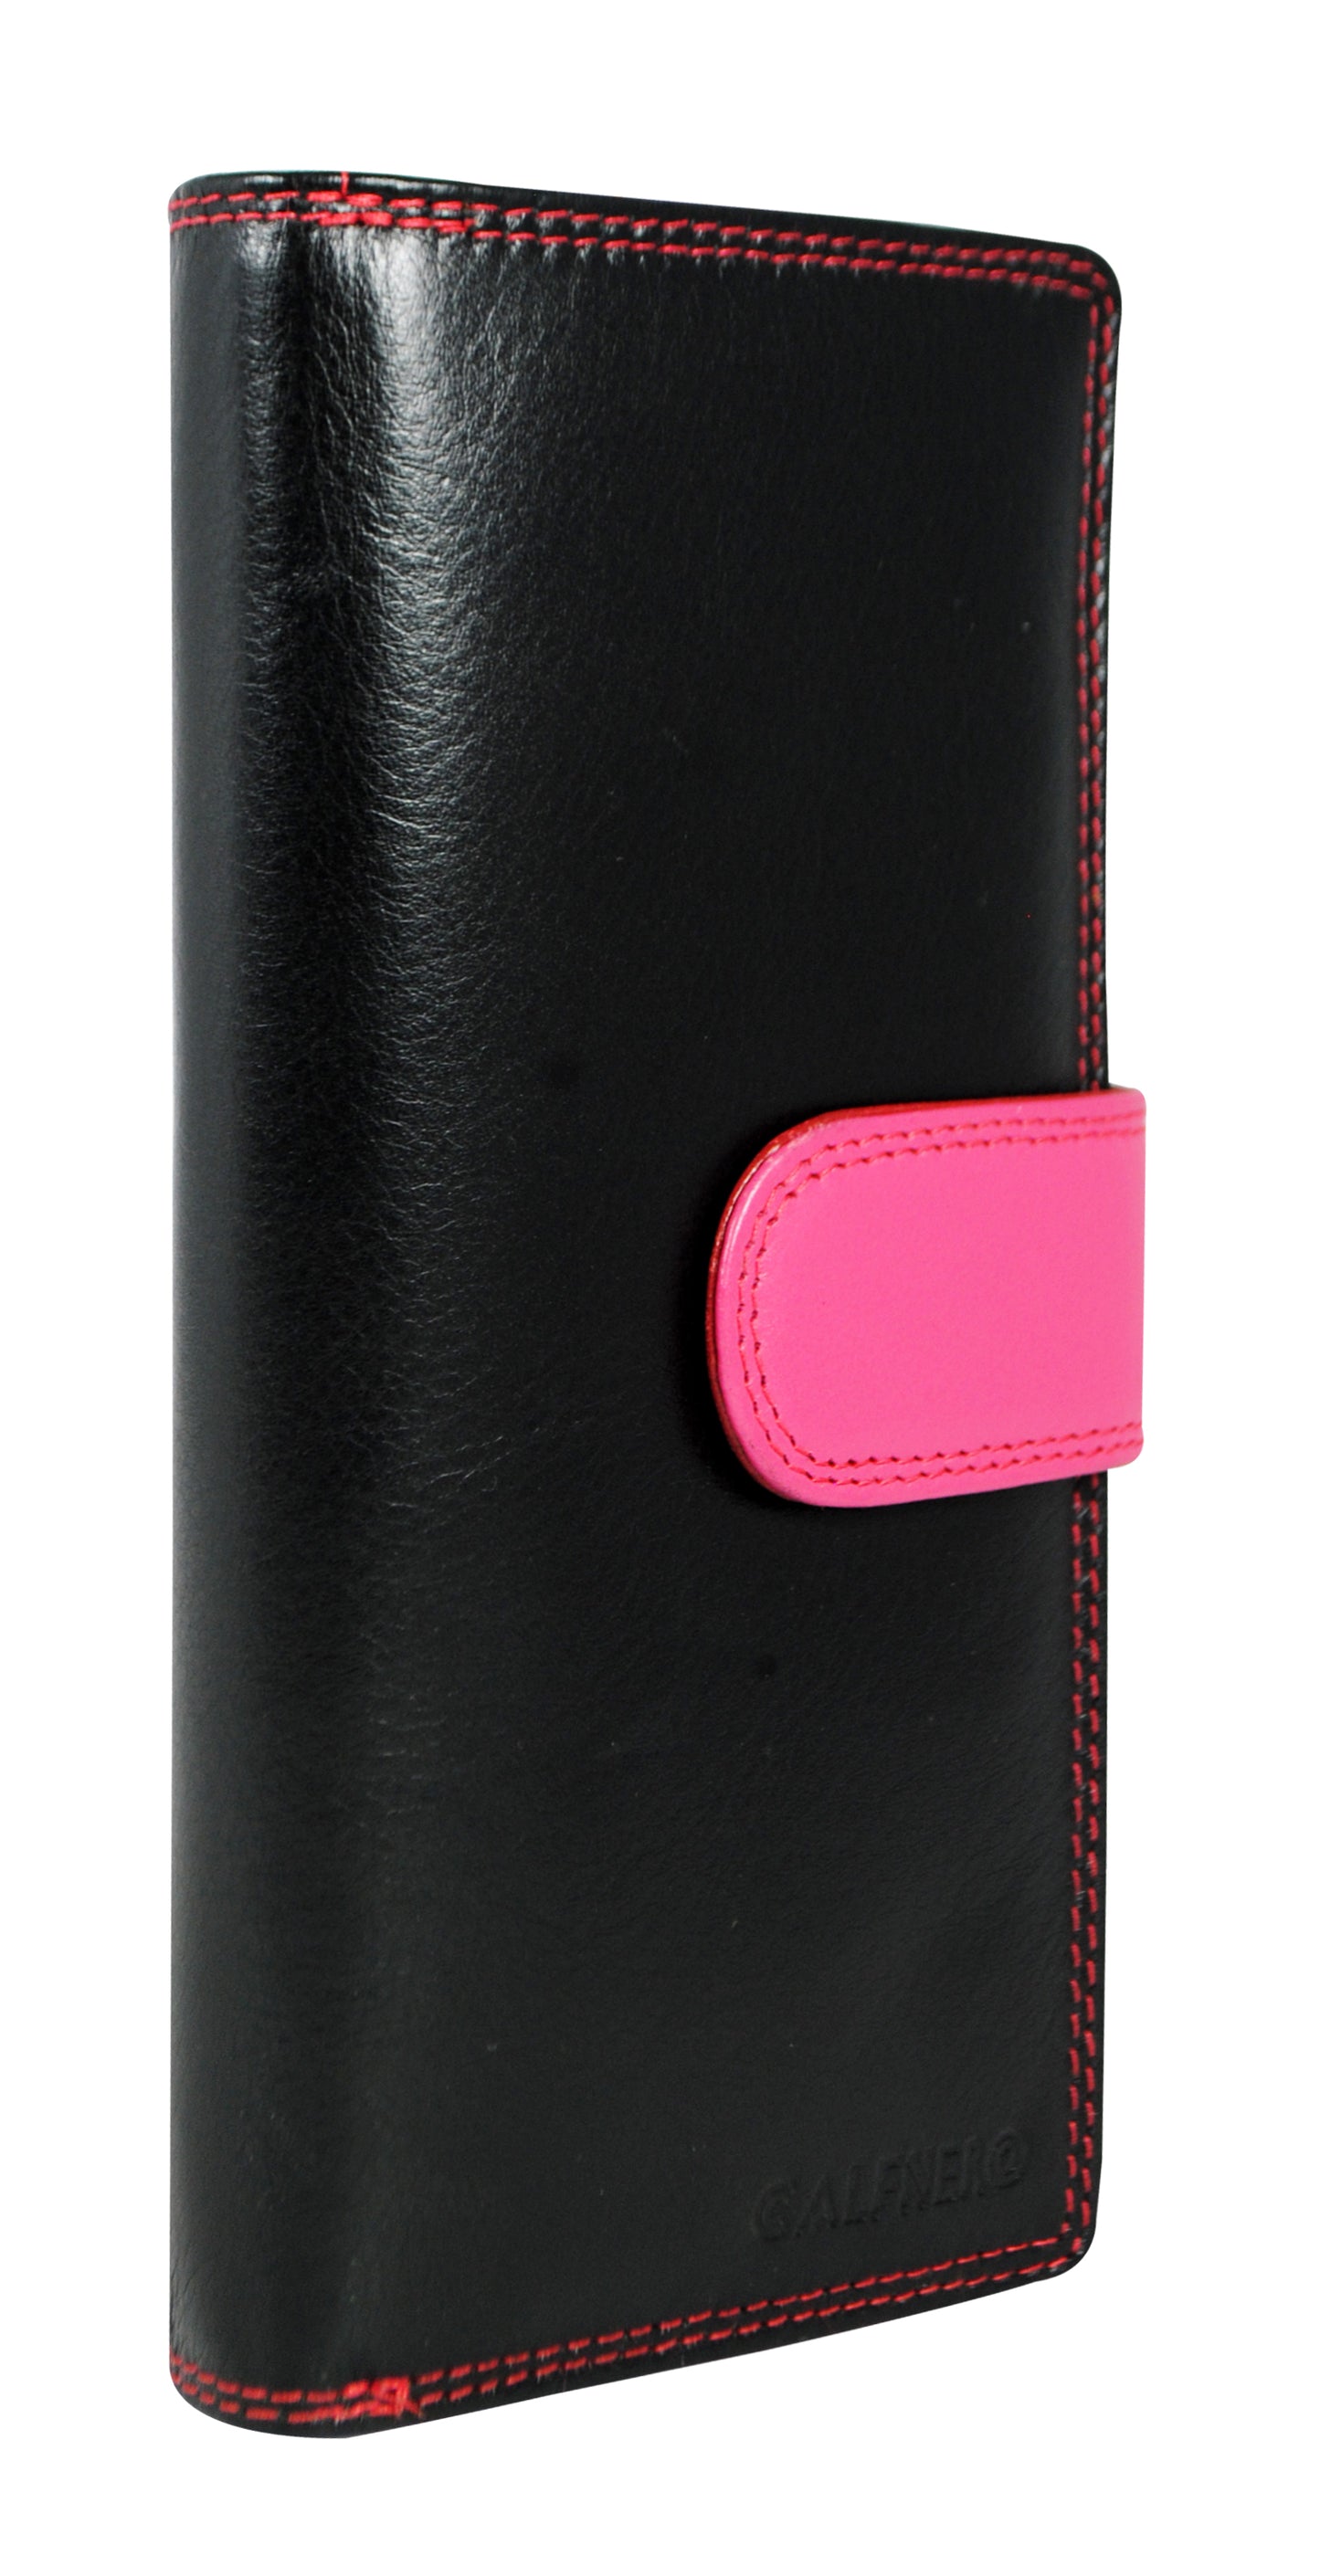 Calfnero Genuine Leather Women's Wallet (6082-Black-Multi)